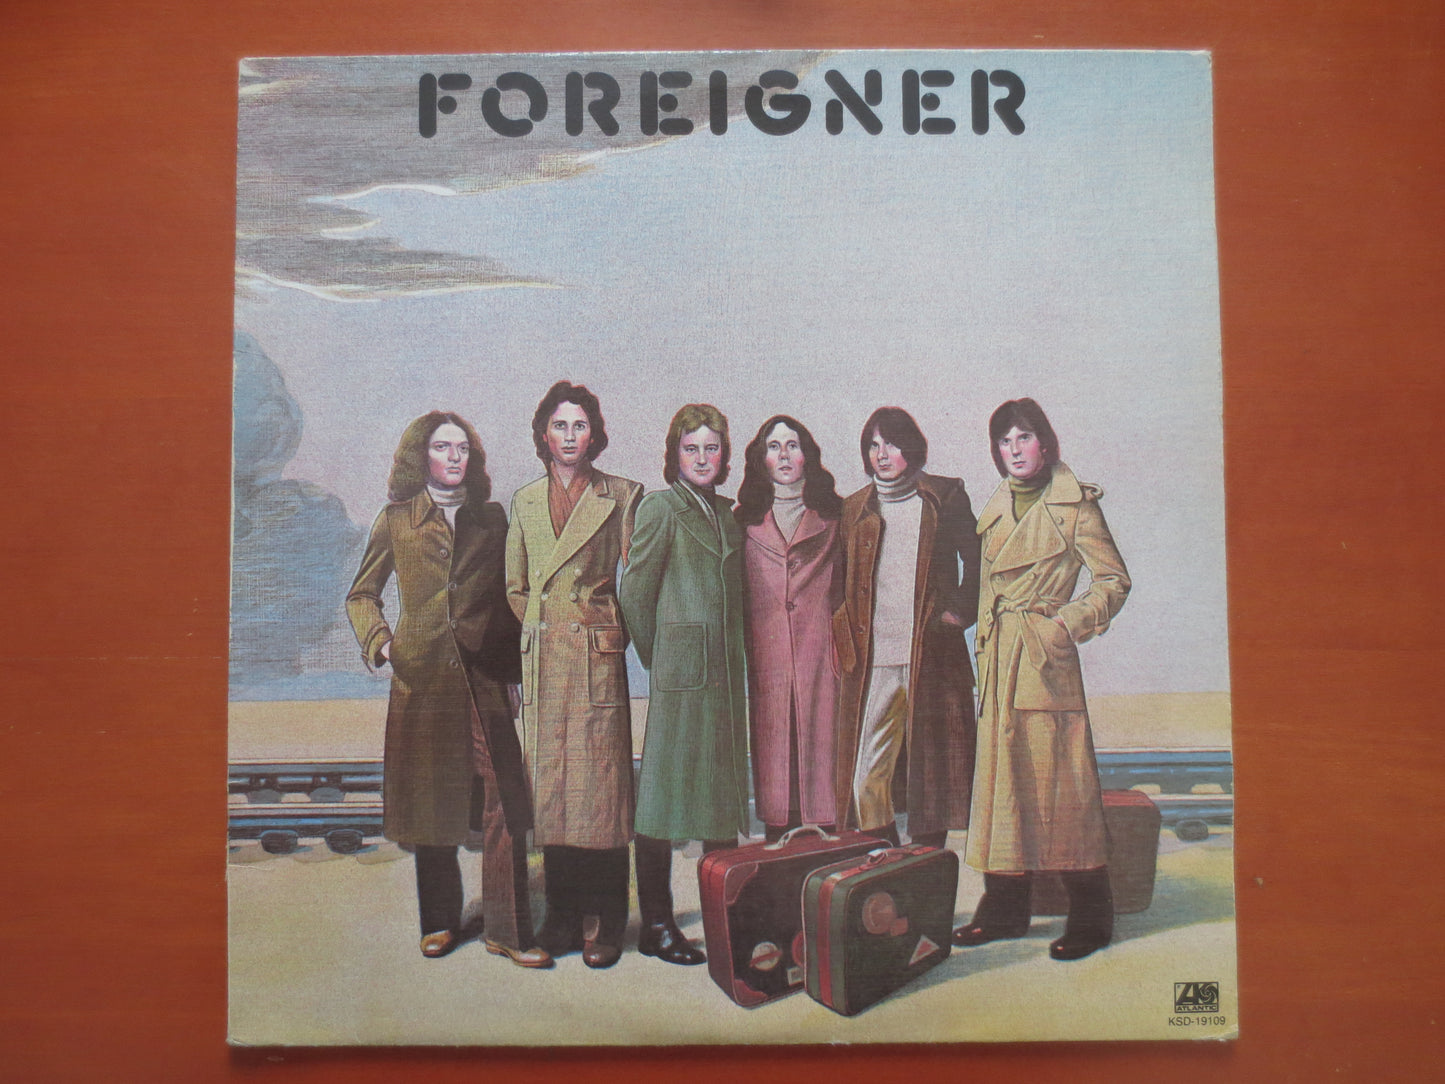 FOREIGNER, FOREIGNER Record, FOREIGNER Album, Foreigner Vinyl, Foreigner Lp, Rock Record, Rock Album, Vinyl Lp, 1977 Record